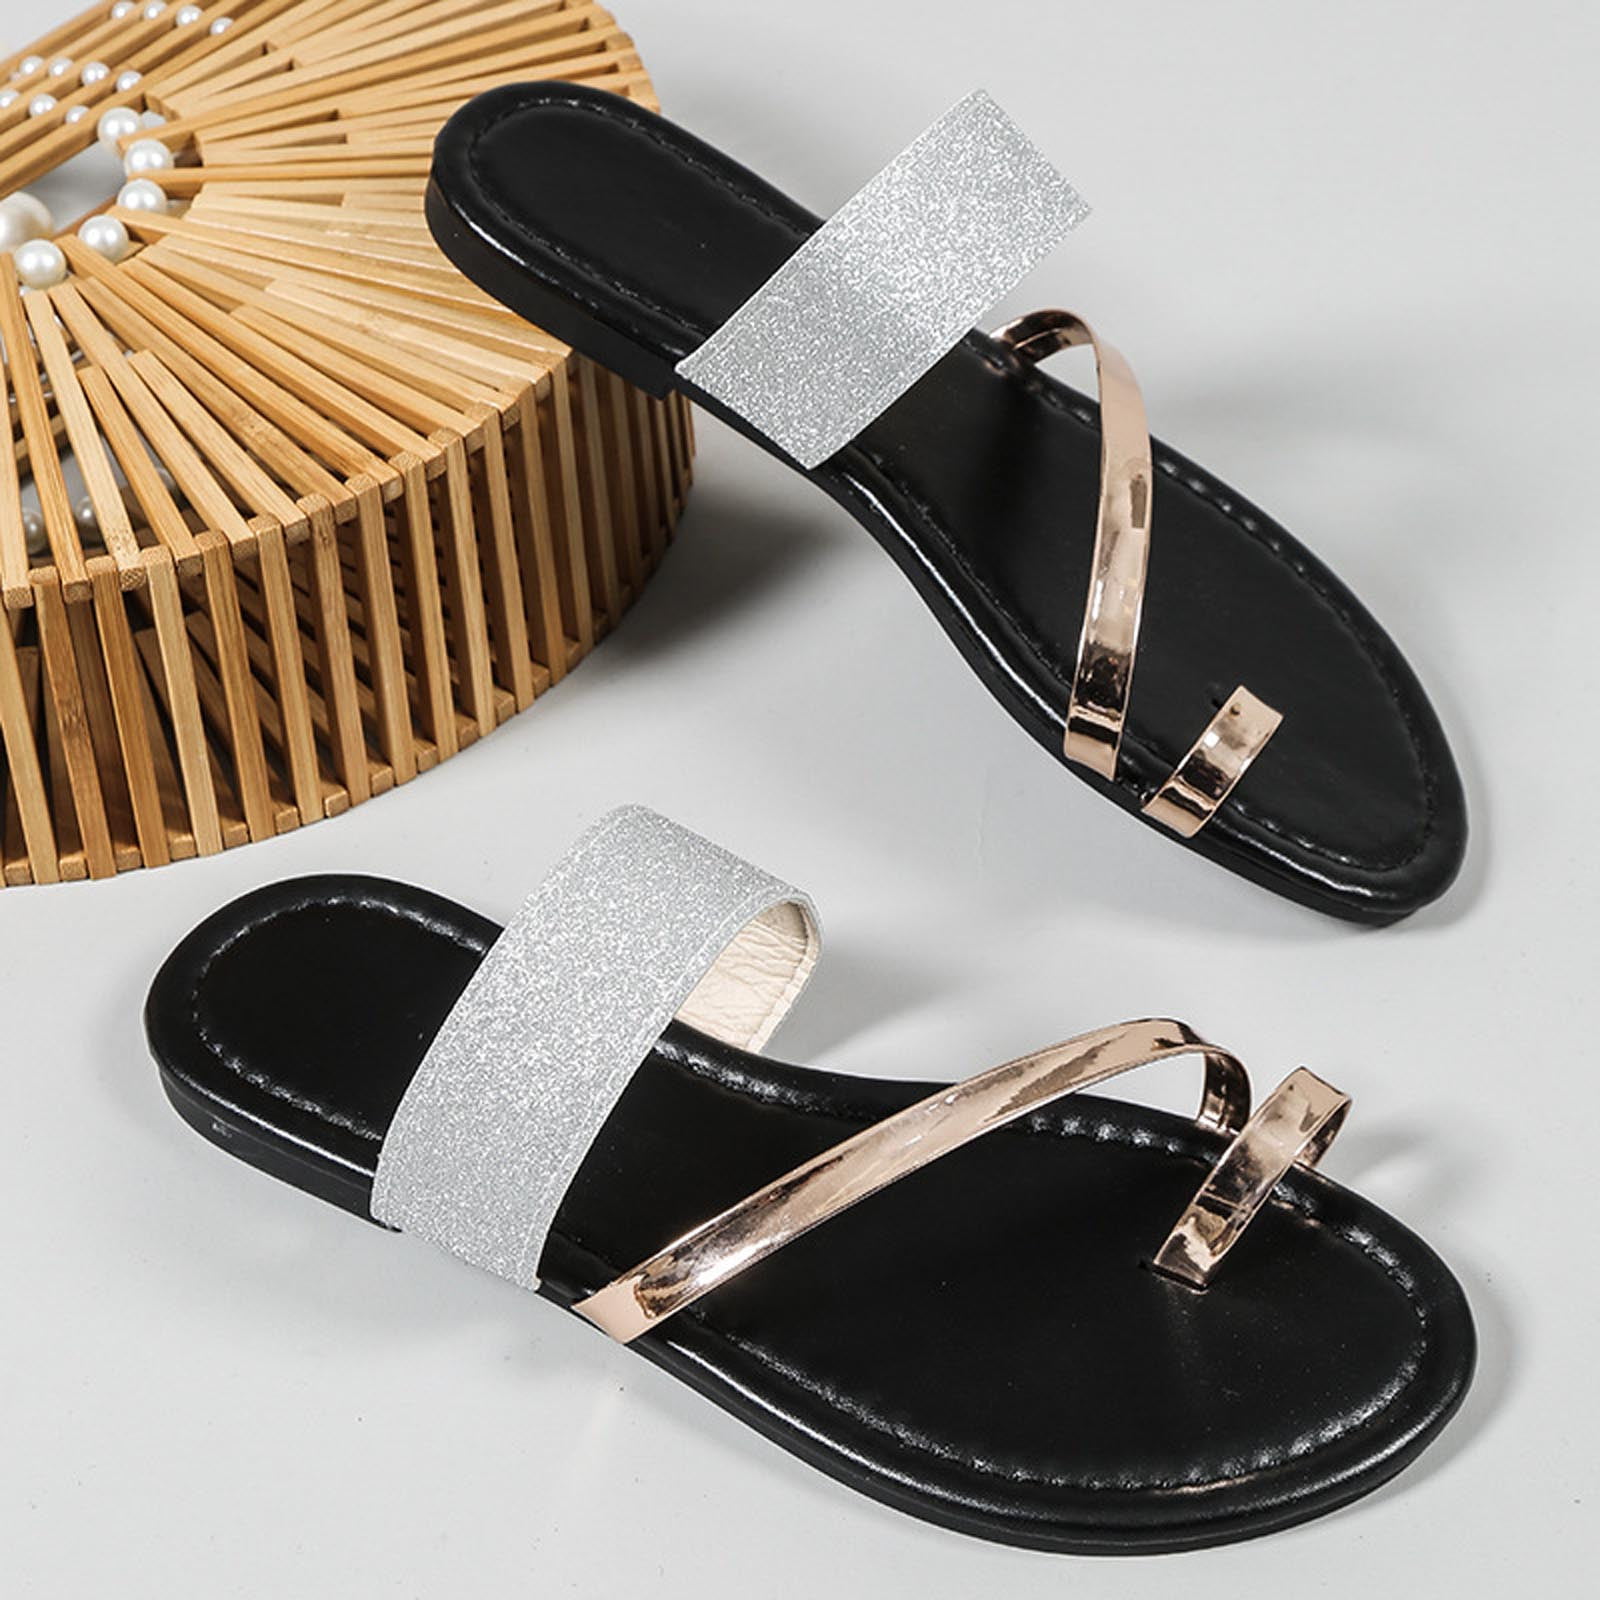 Rhinestone Toe Ring Flat Sandals Womens Summer Fashion Flip Flops With Slip  On Orthopedic Beach Sandals From Chejun, $16.74 | DHgate.Com